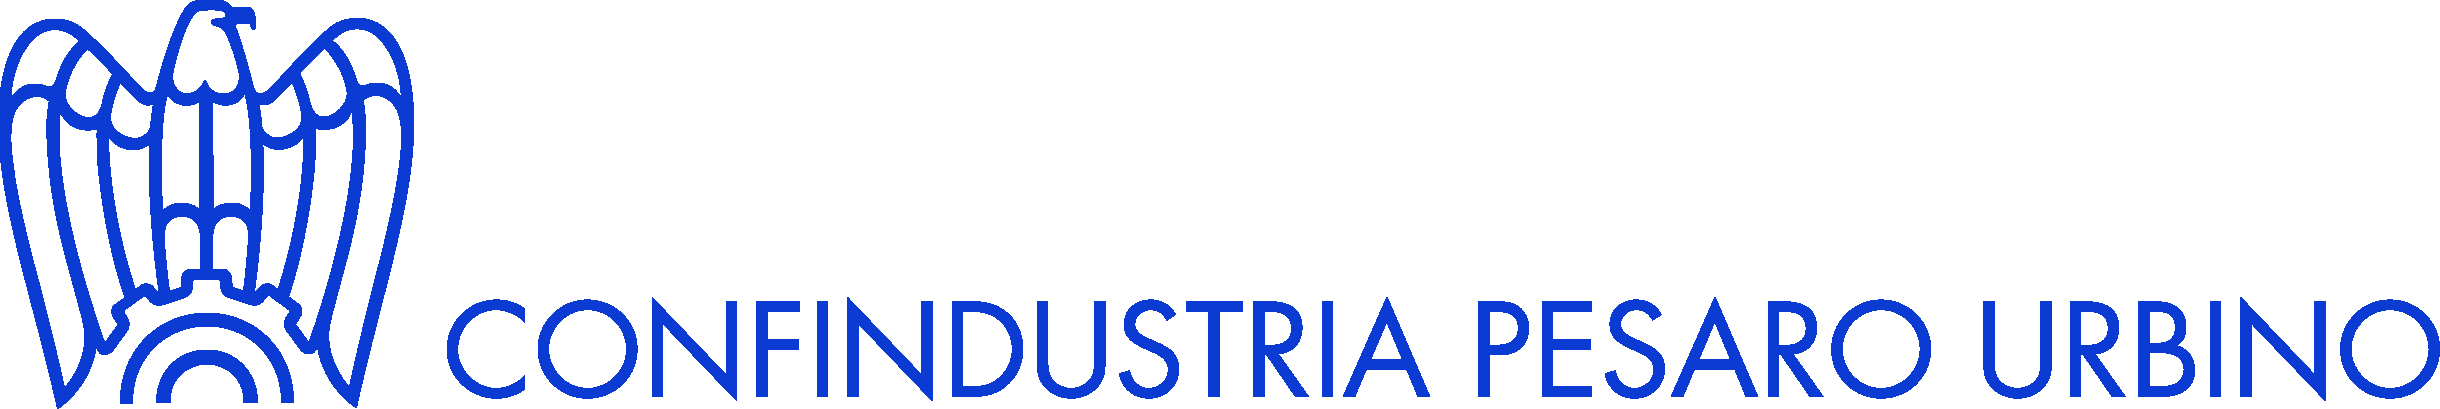 Apprendo Imprendo - Logo Confindustria Pesaro Urbino